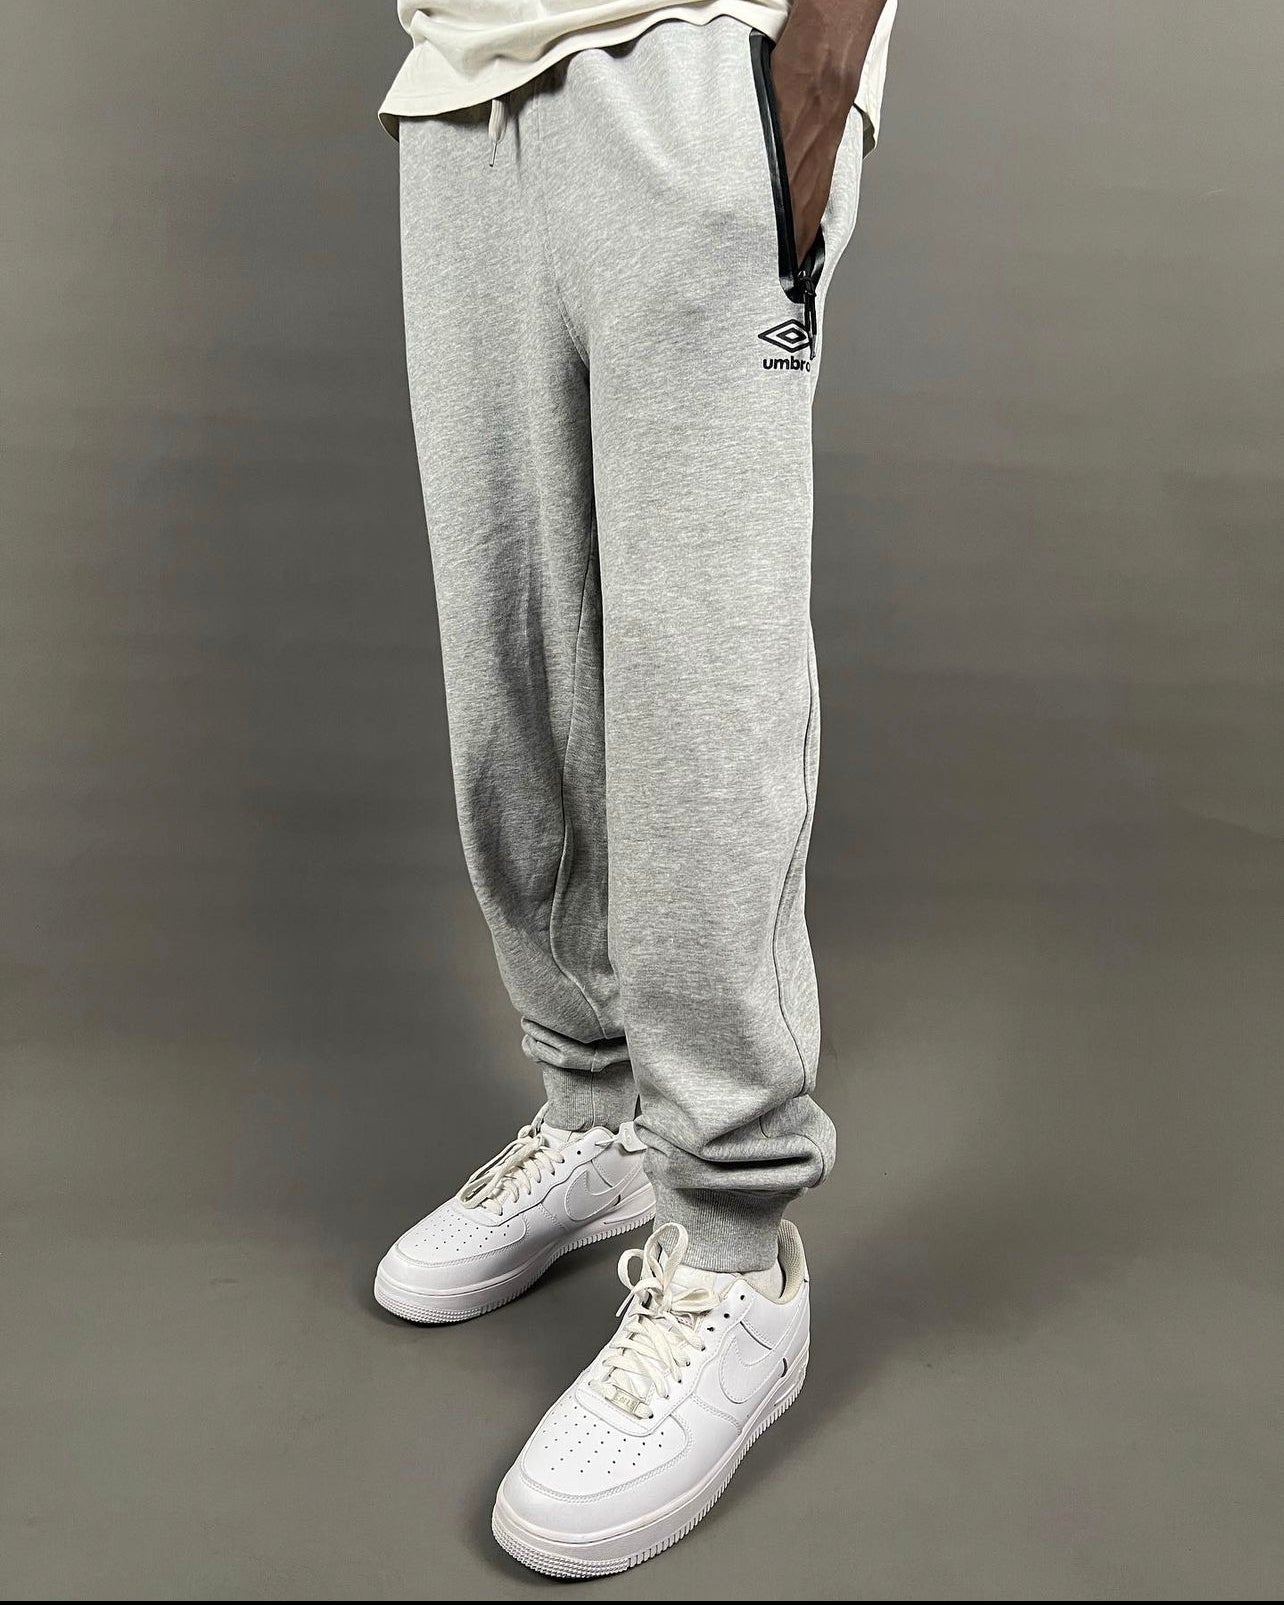 Umbro jogger pants in grey